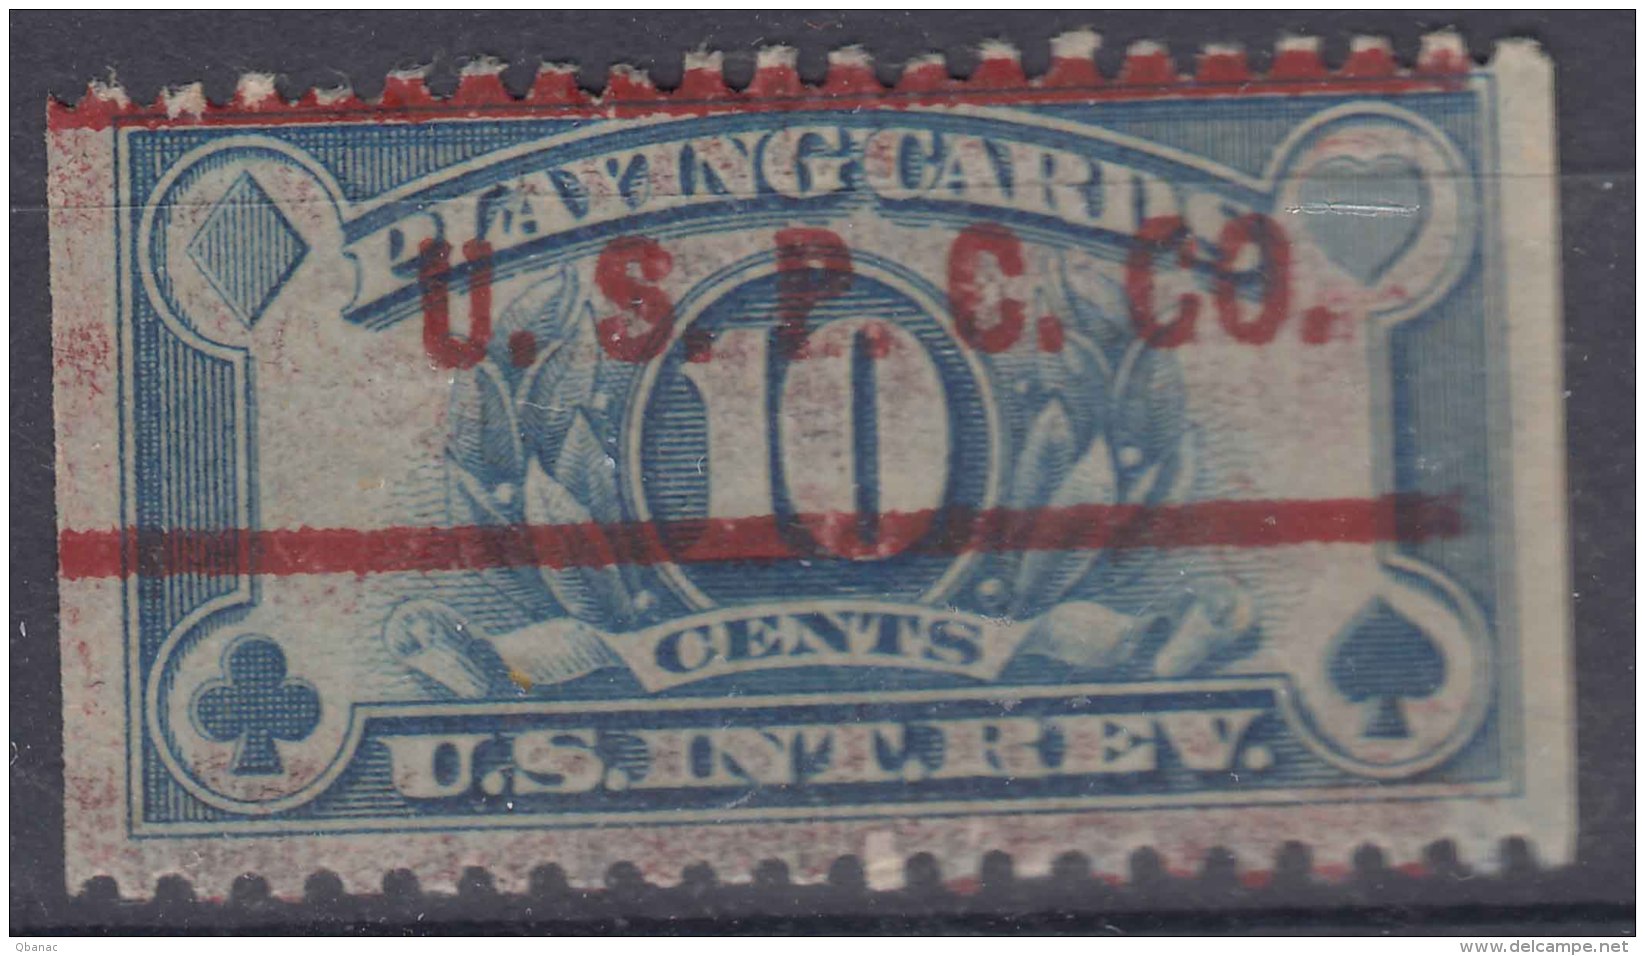 USA Revenue Stamp - Revenues